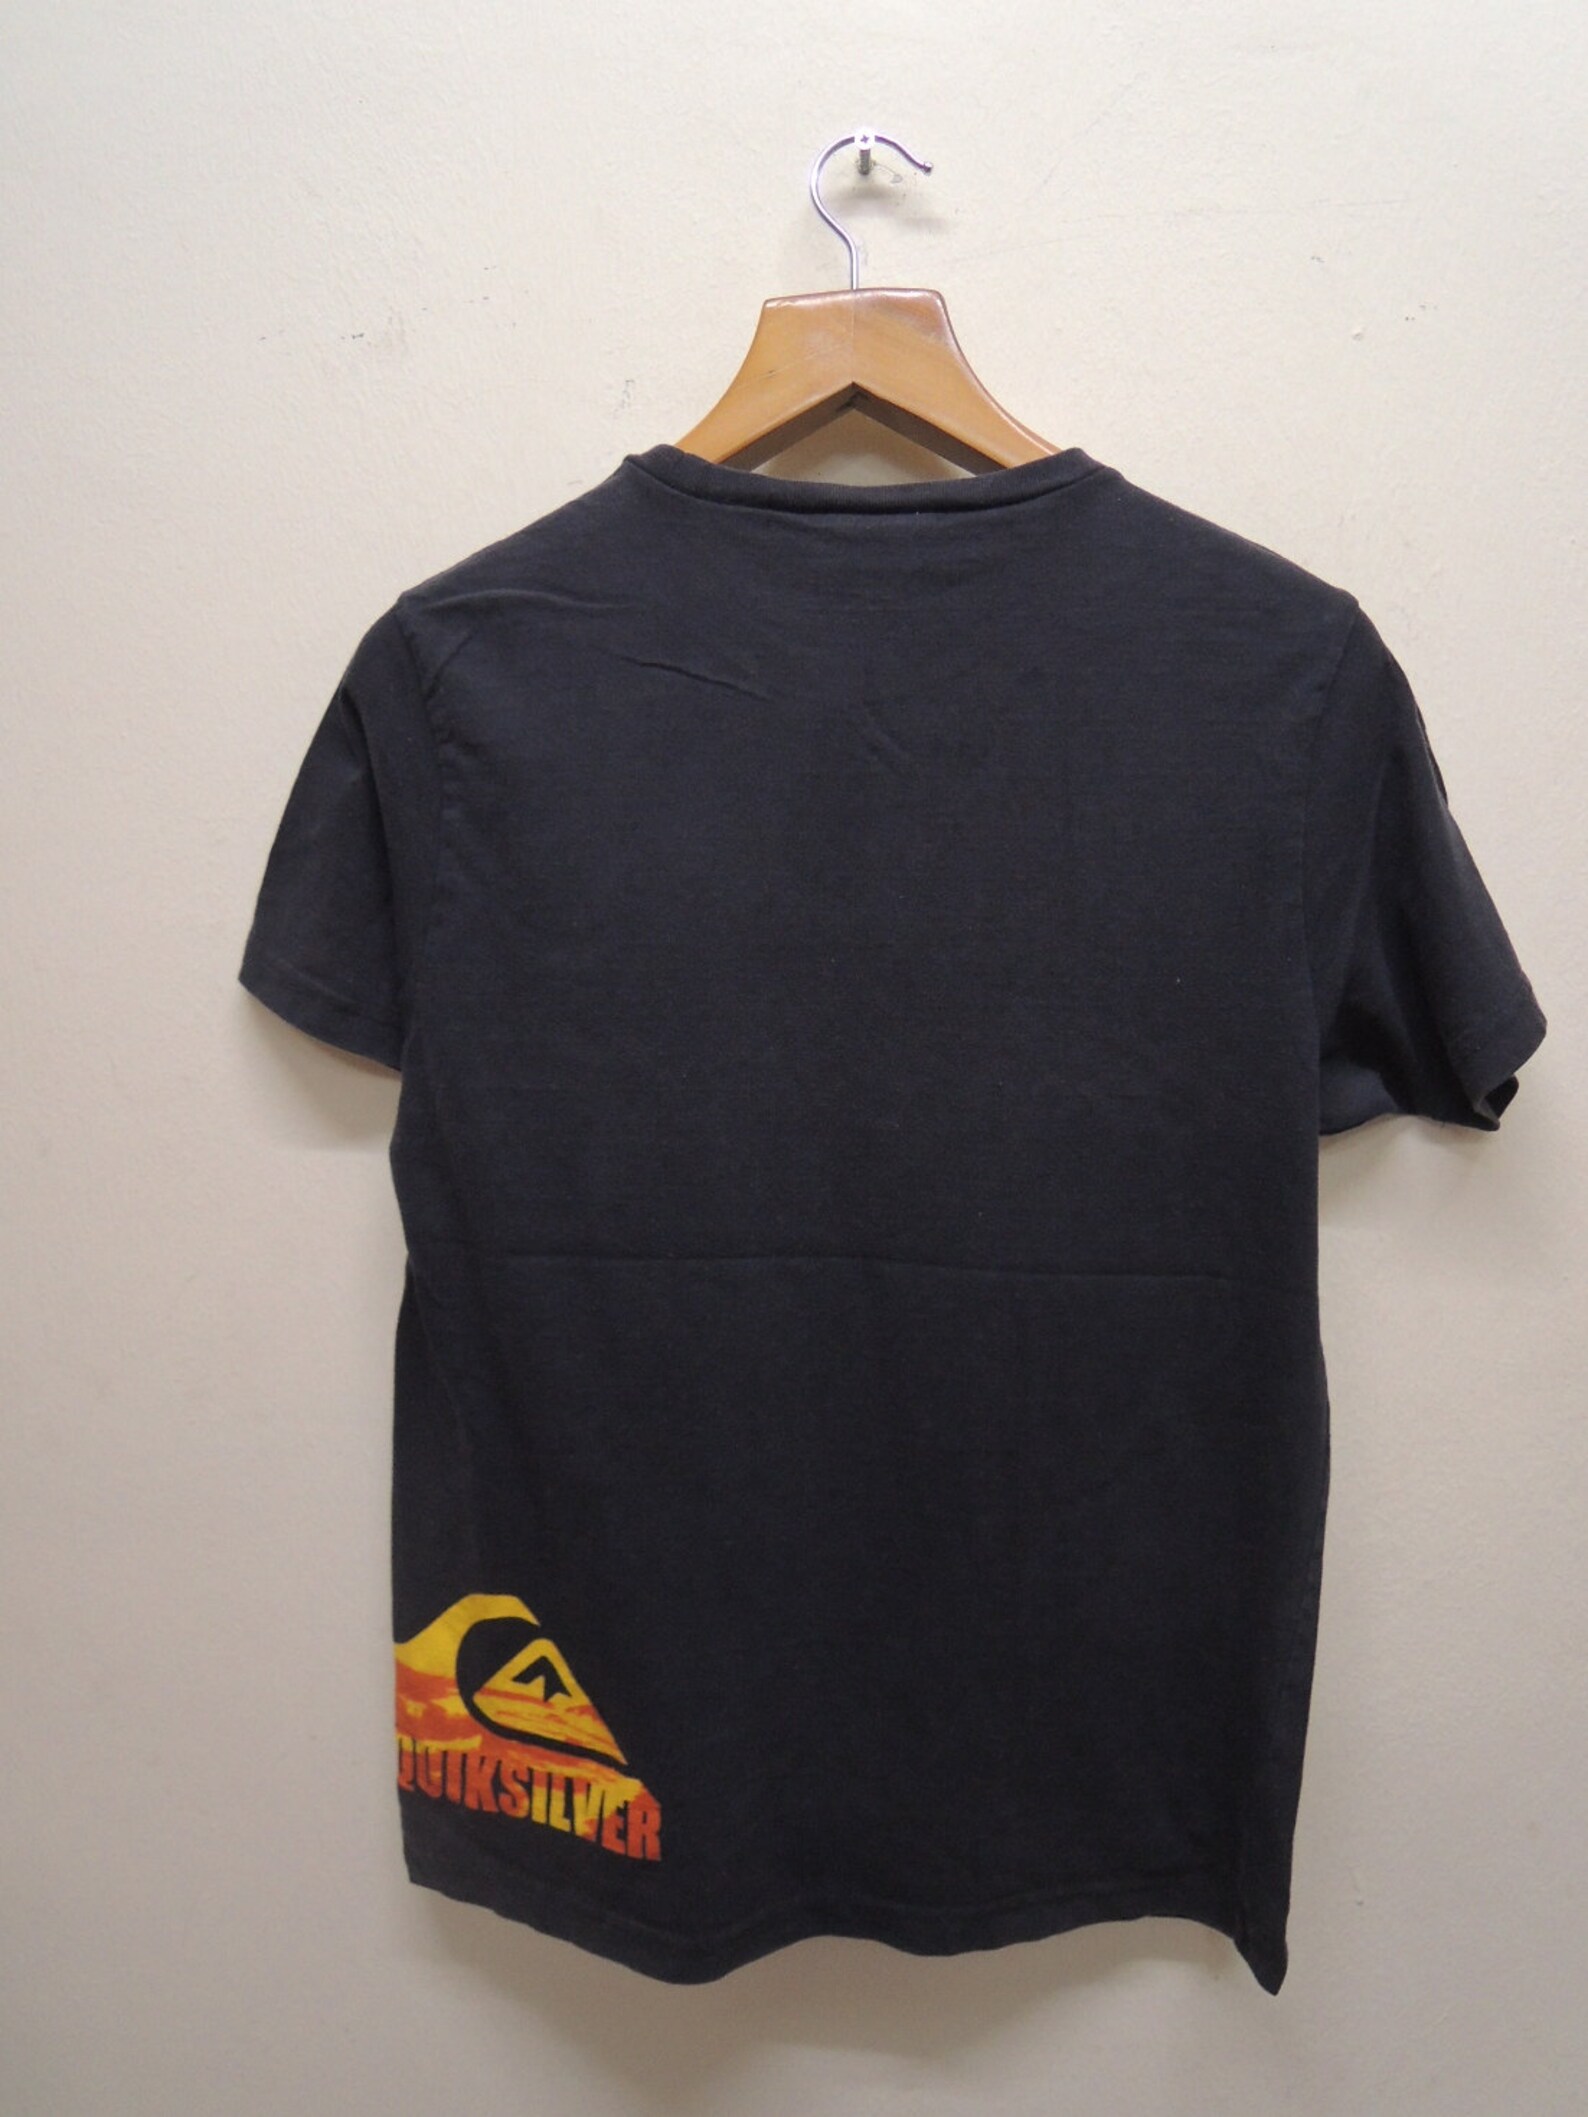 Vintage Quiksilver Surf T Shirt Sport Street Wear Swag Top Tee | Etsy